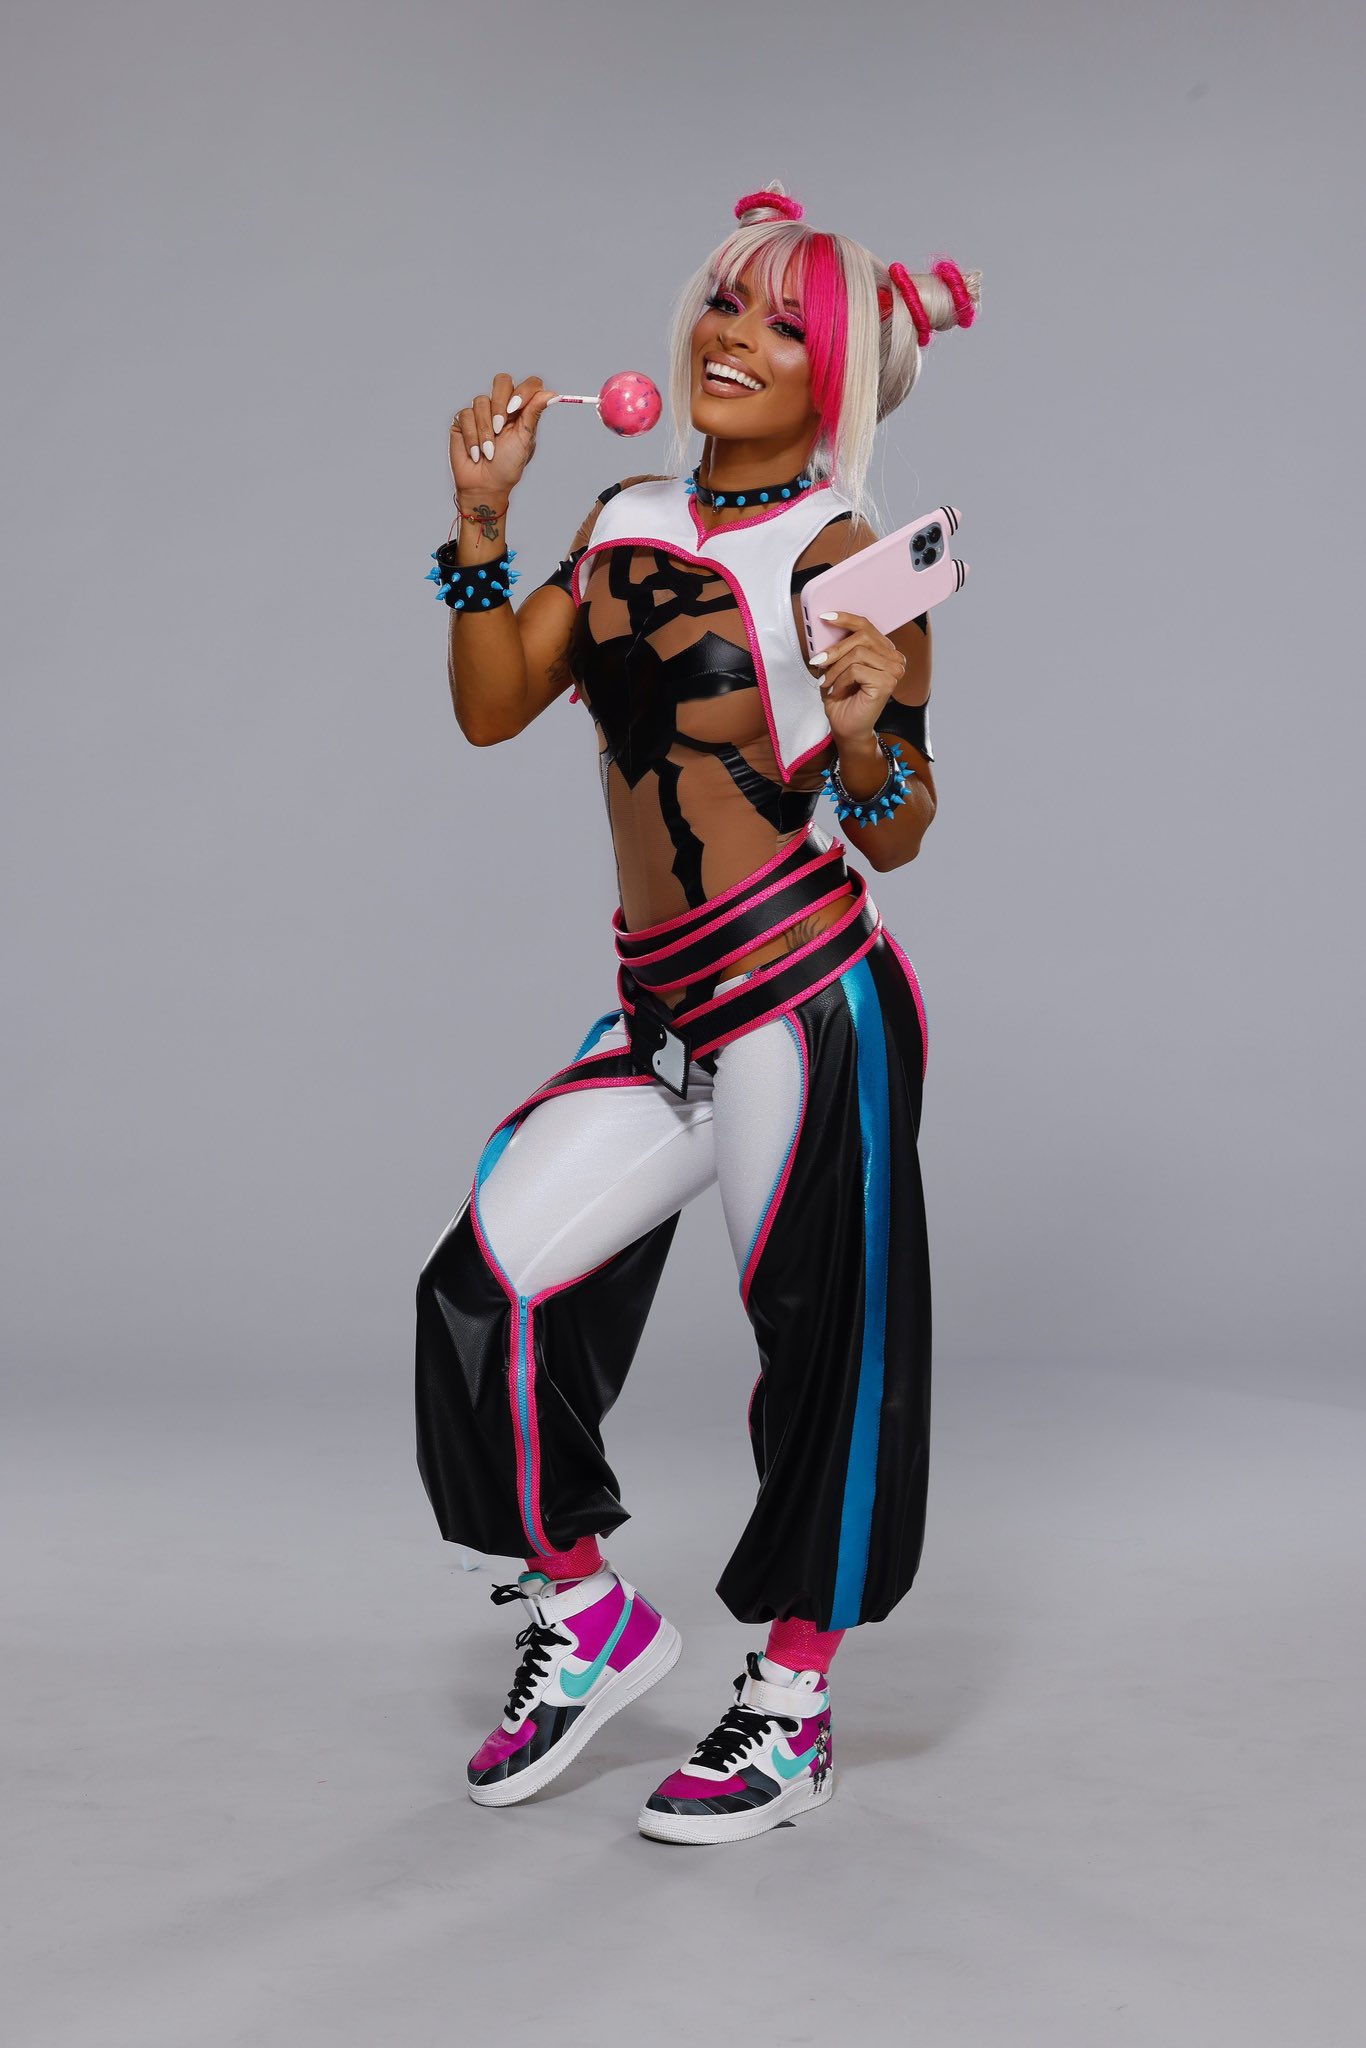 Zelina Vega se presenta con traje de Juri de Street Fighter 6 en Royal Rumble 3